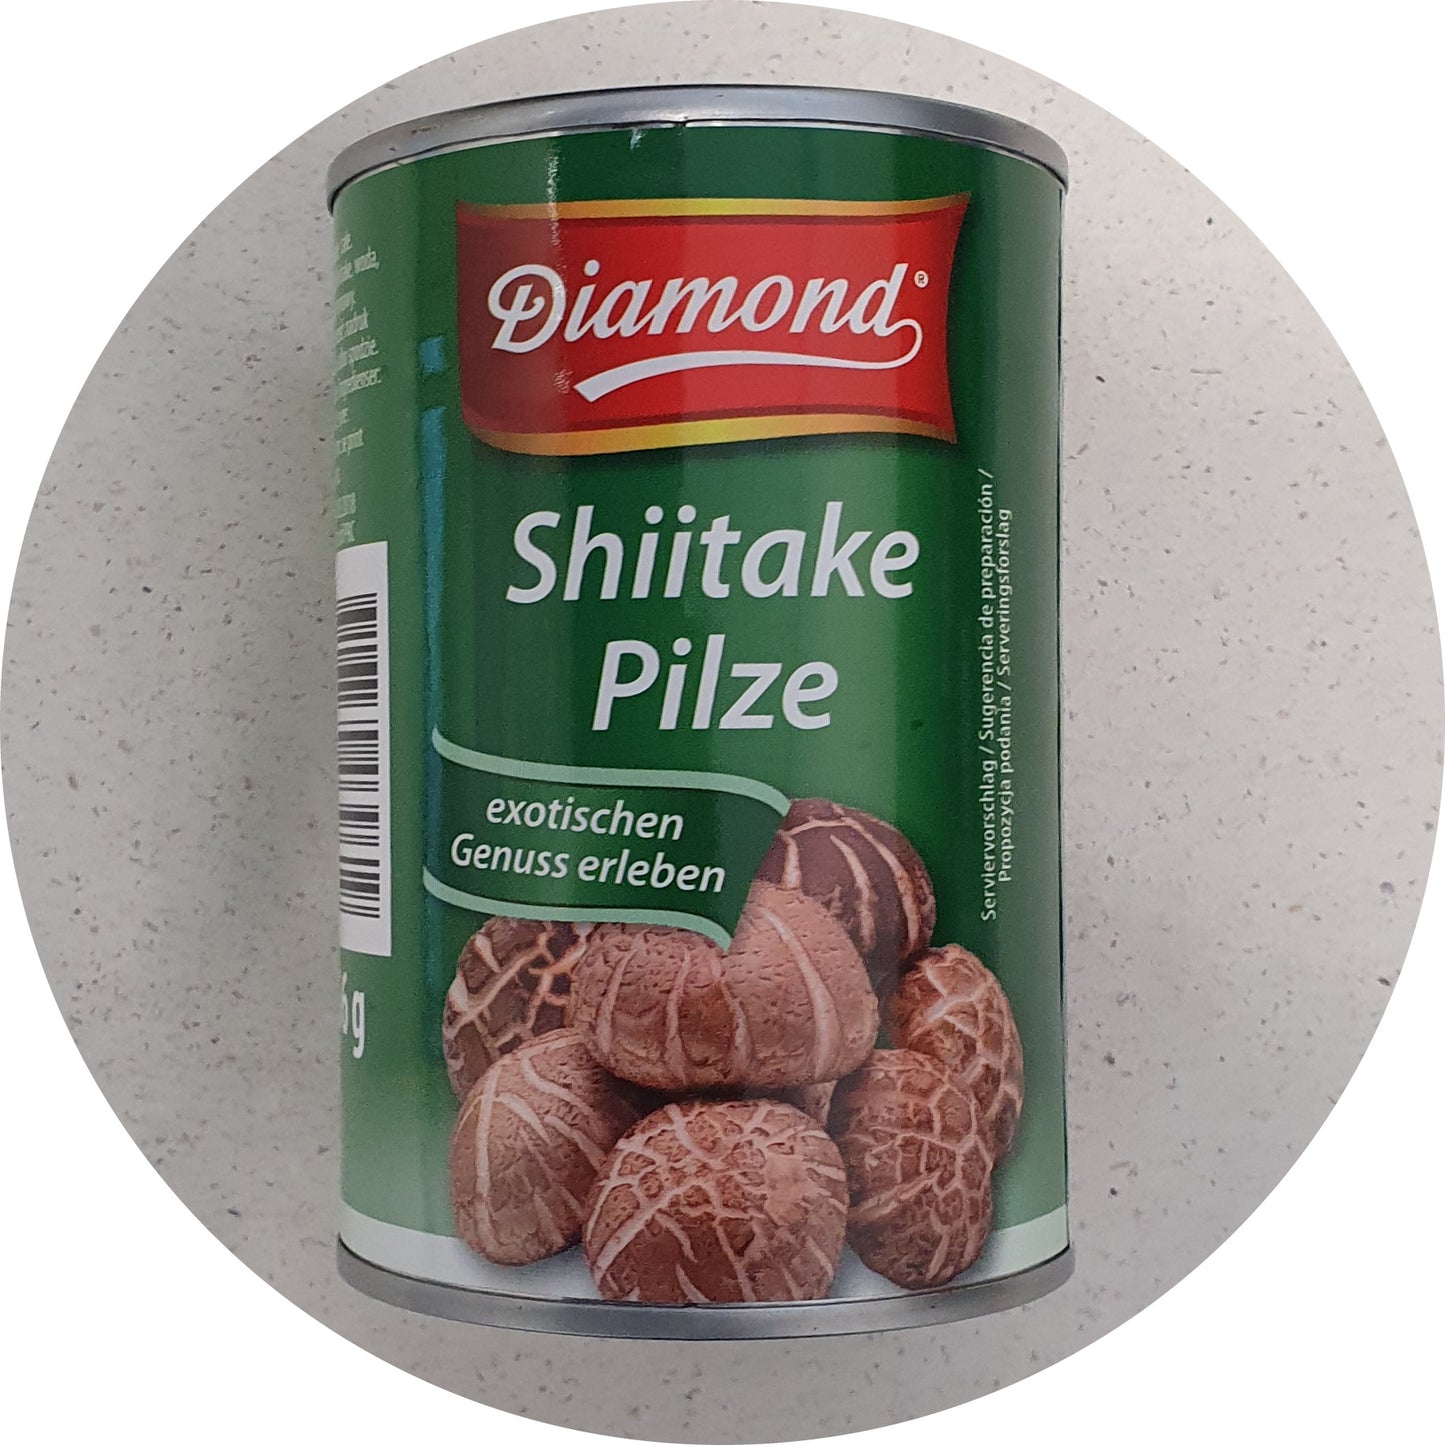 Diamond Shiitake Pilze 284g / 156g